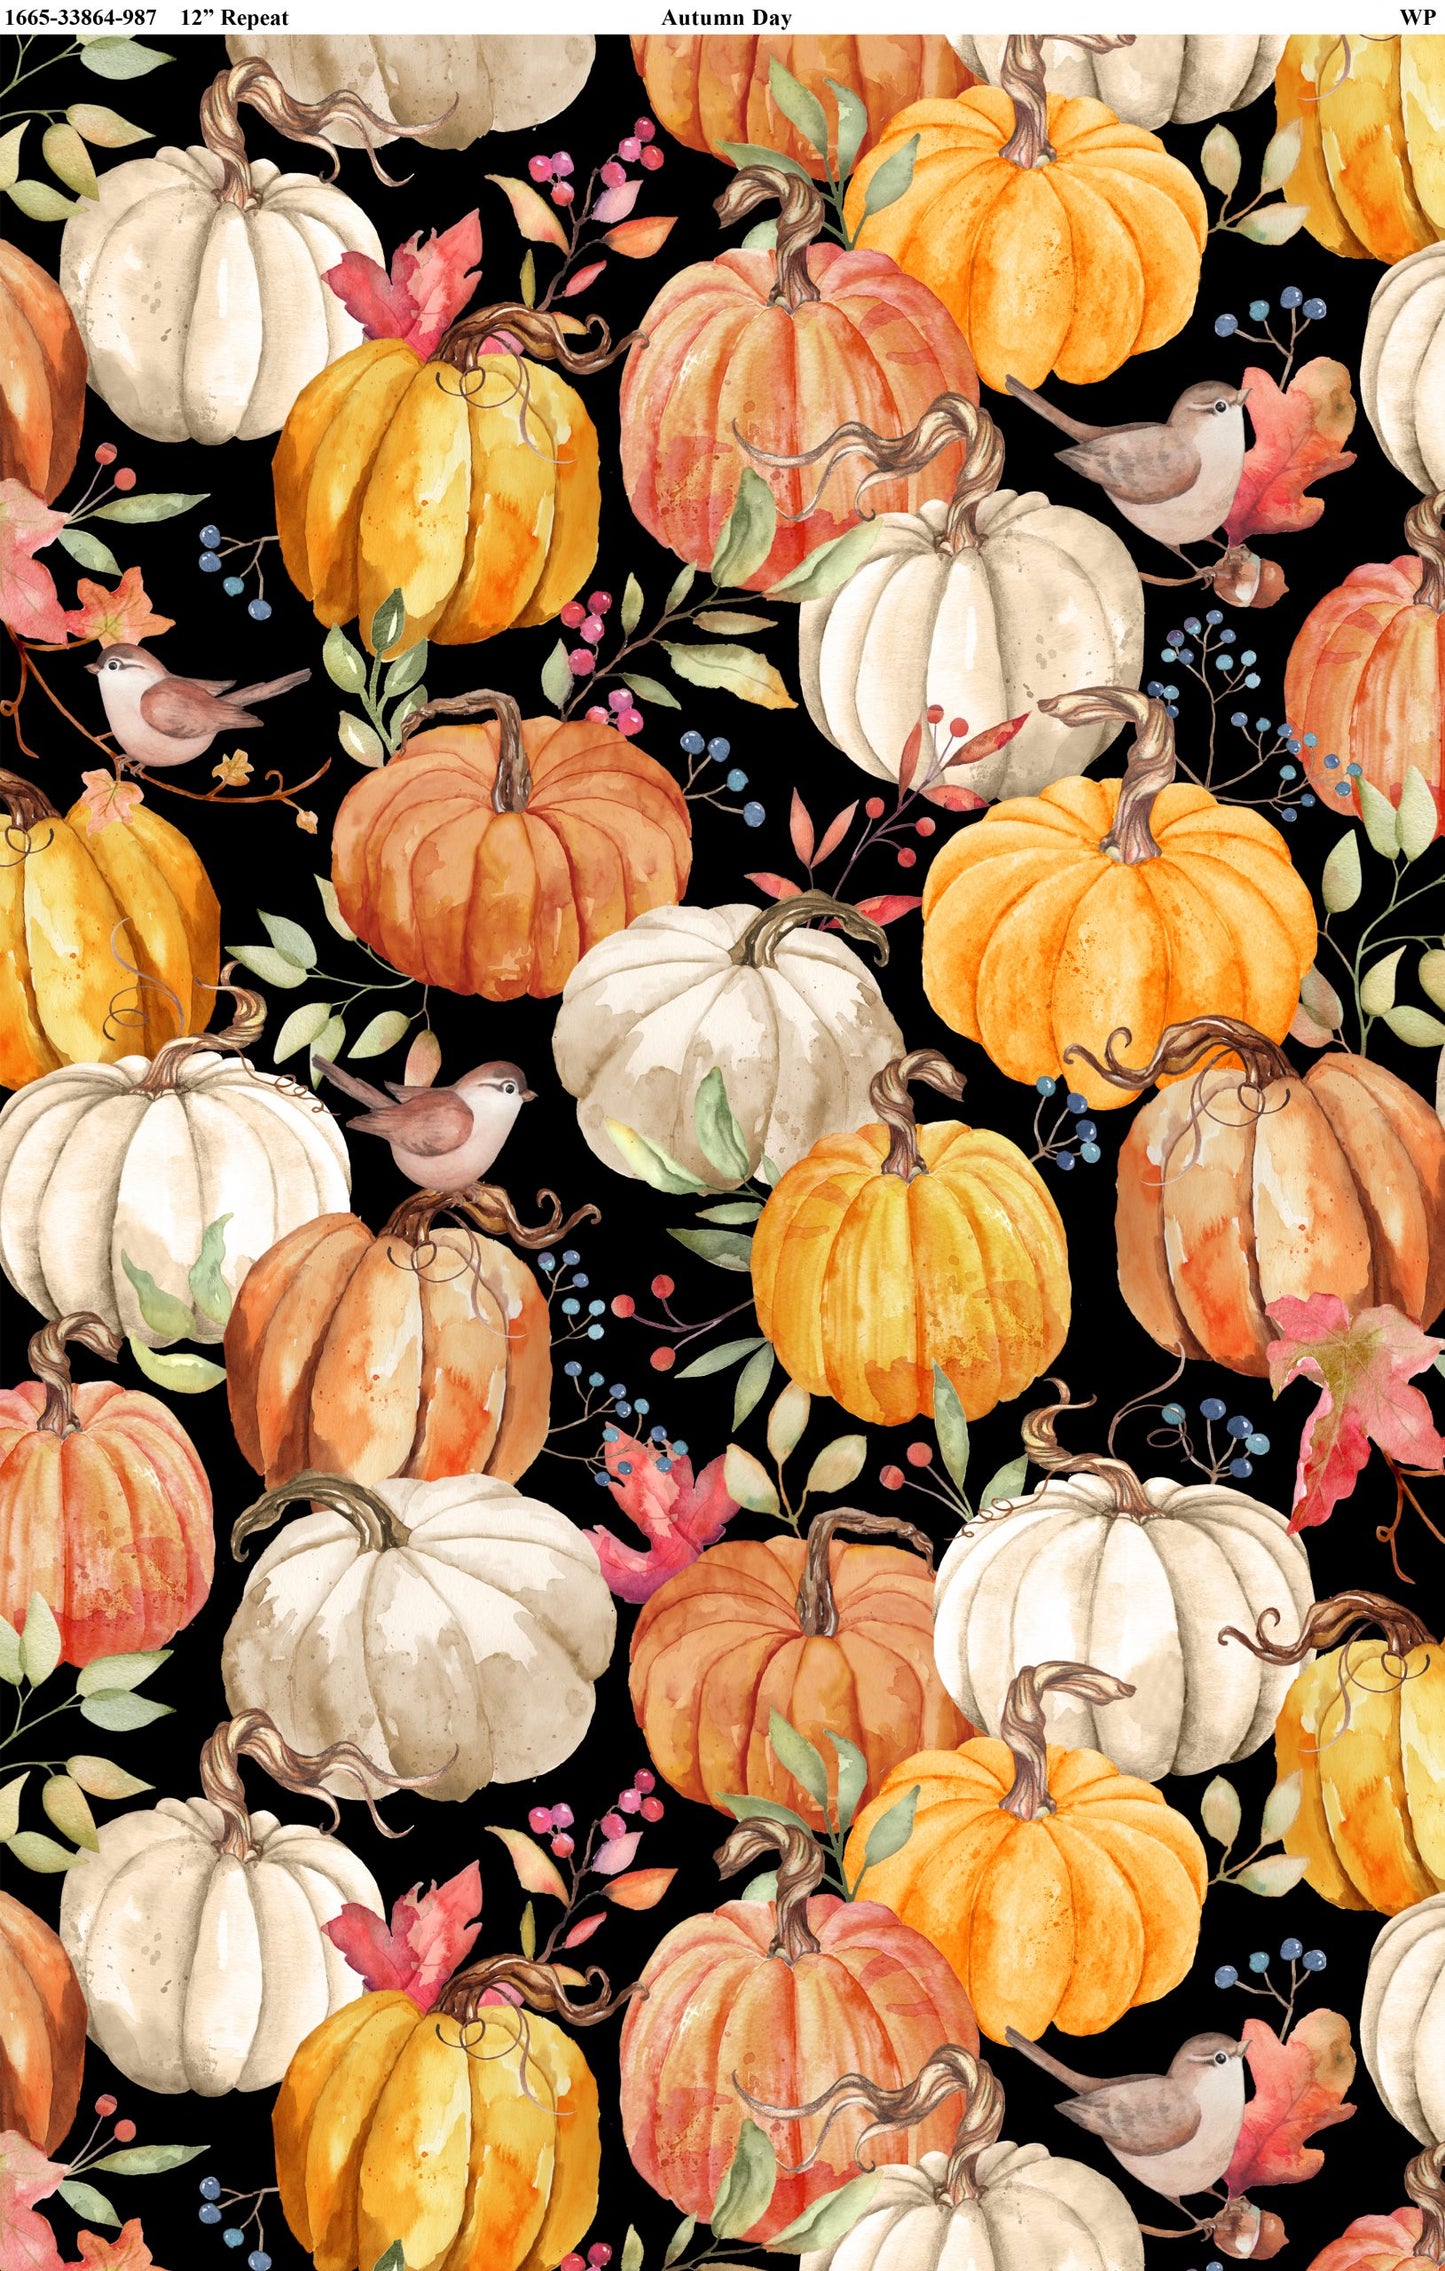 Autumn Day - Pumpkins - Black